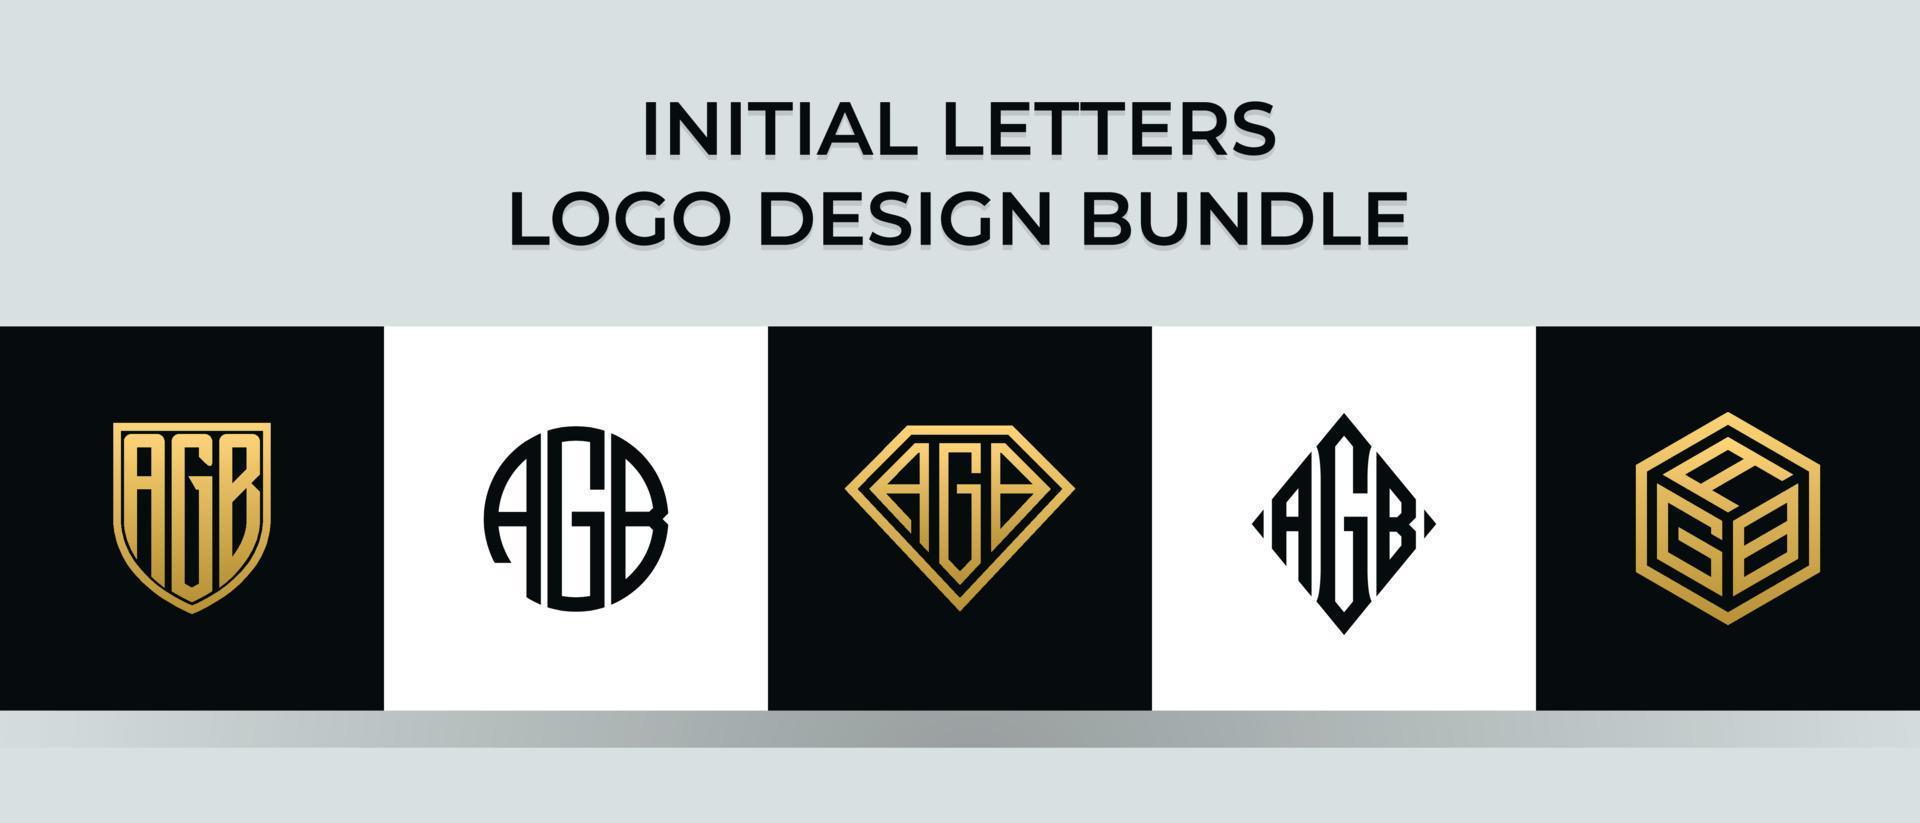 Initial letters AGB logo designs Bundle vector